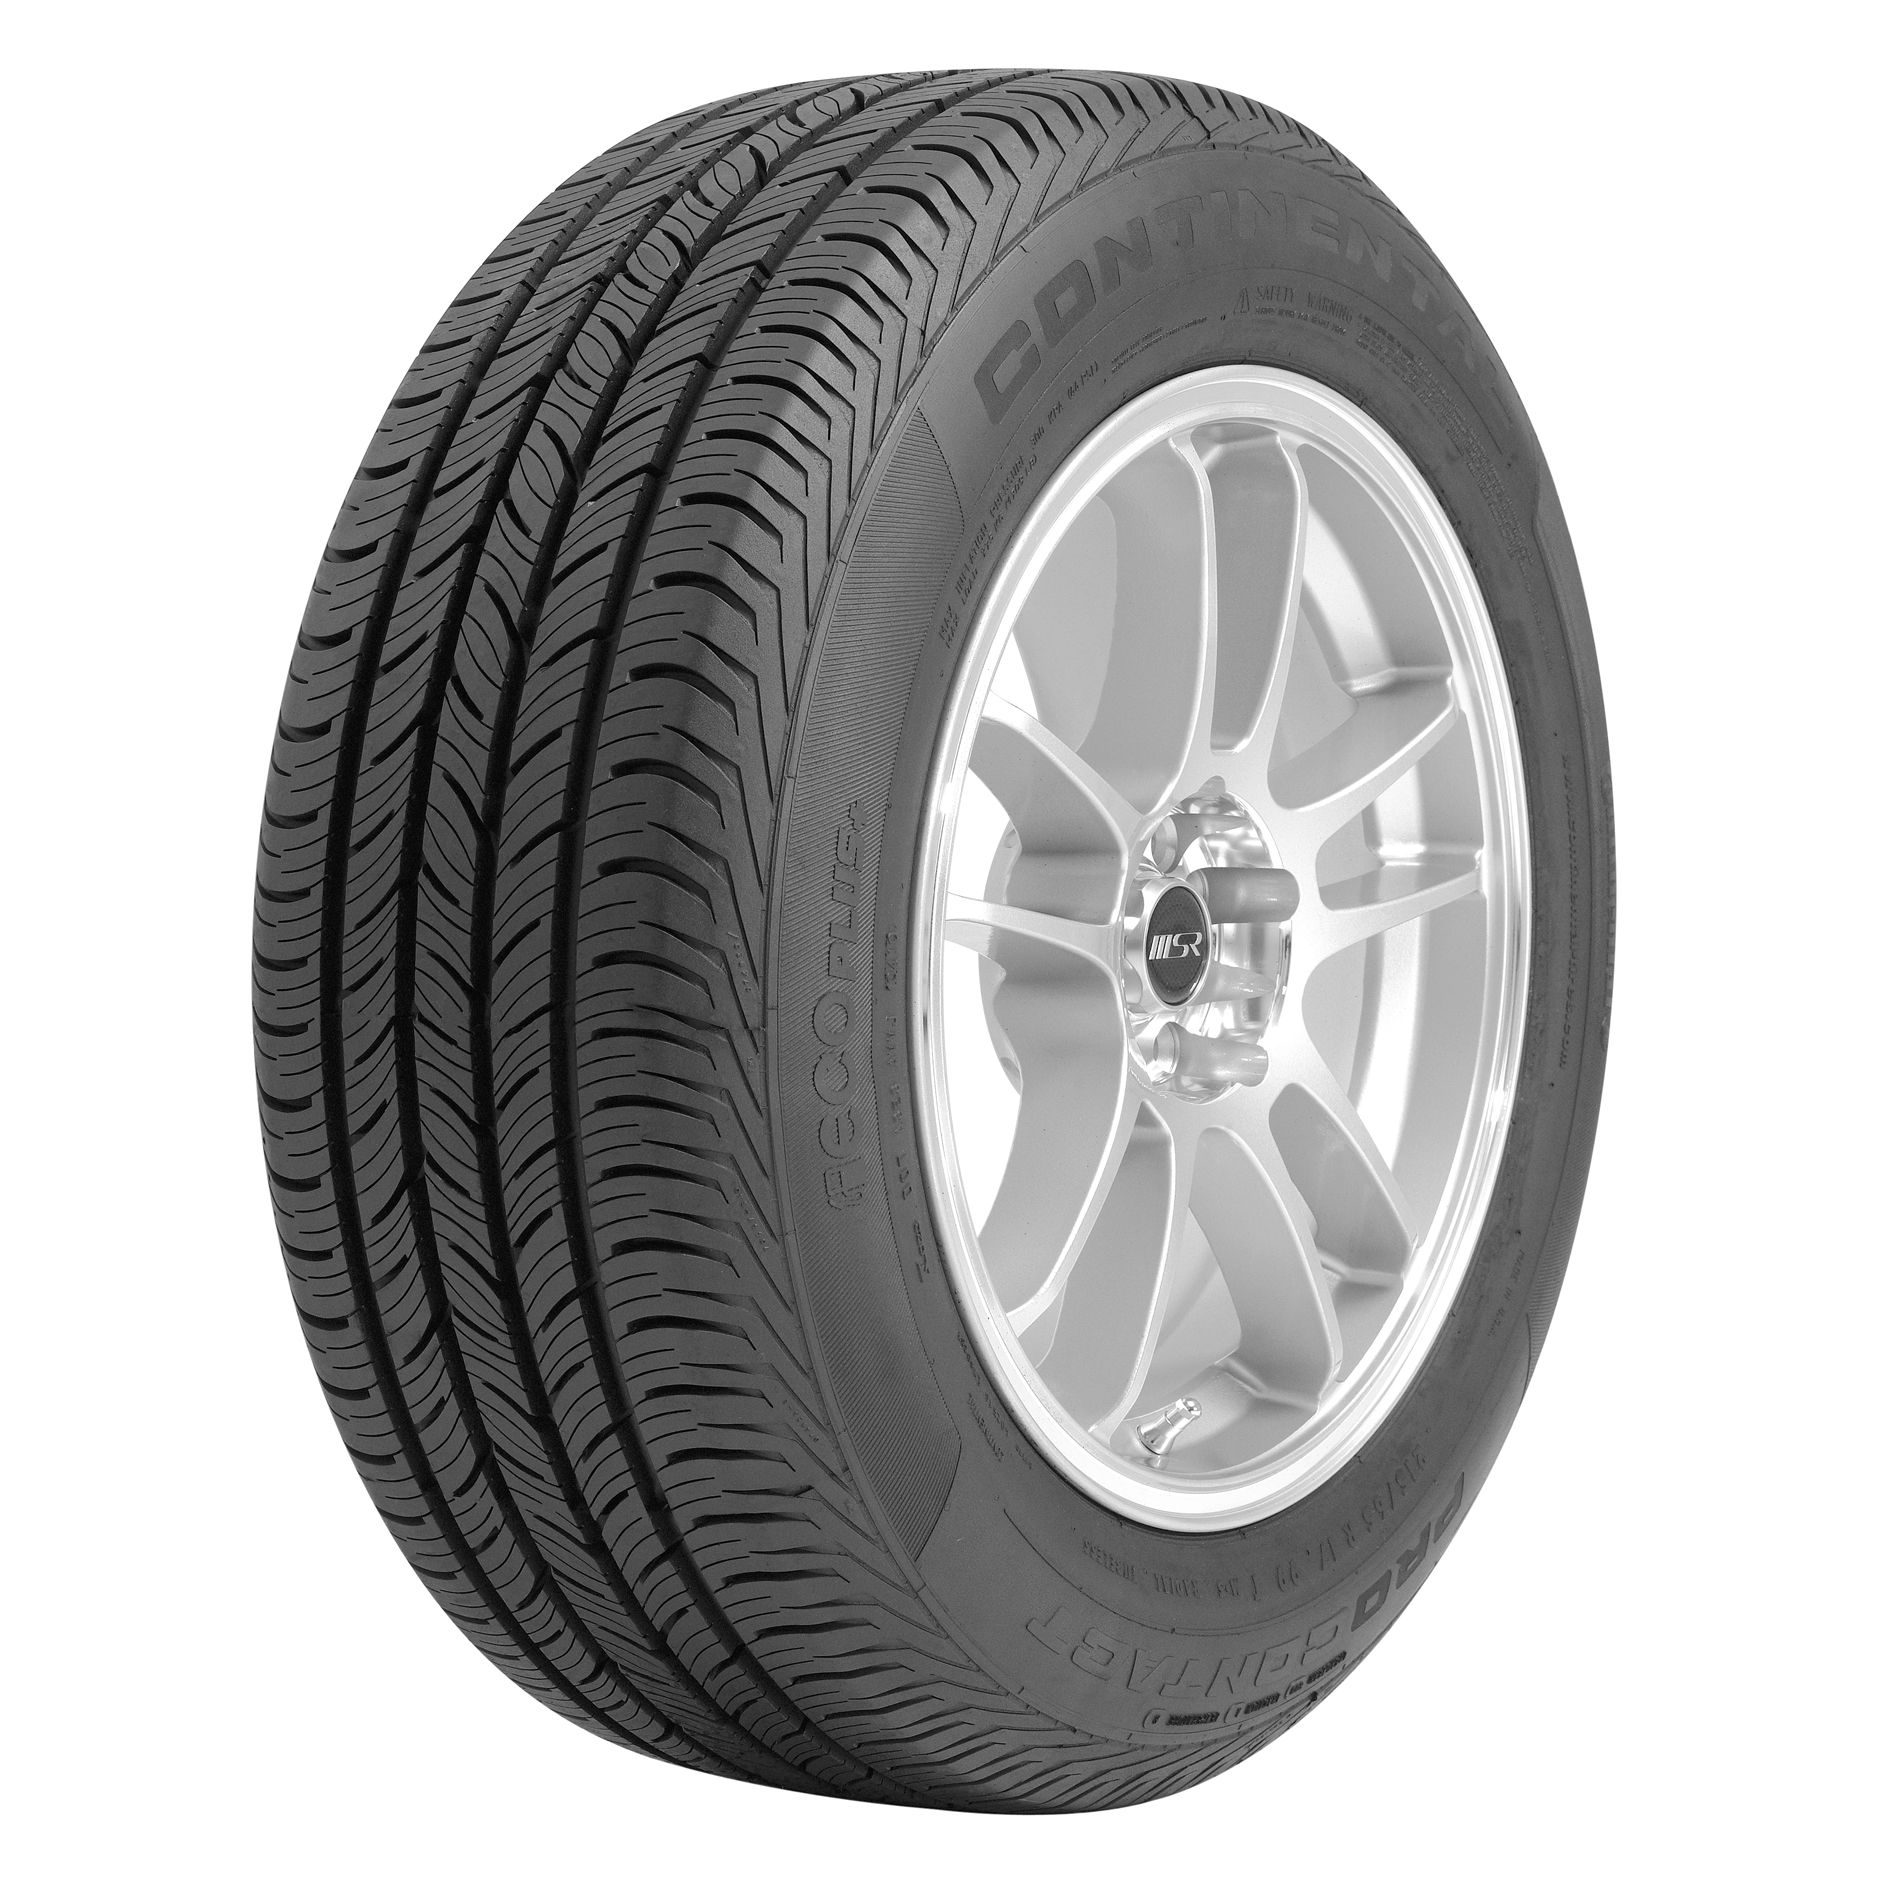 Continental Pro Contact Eco Plus - 215/60R16 95T BW - All-Season Tire